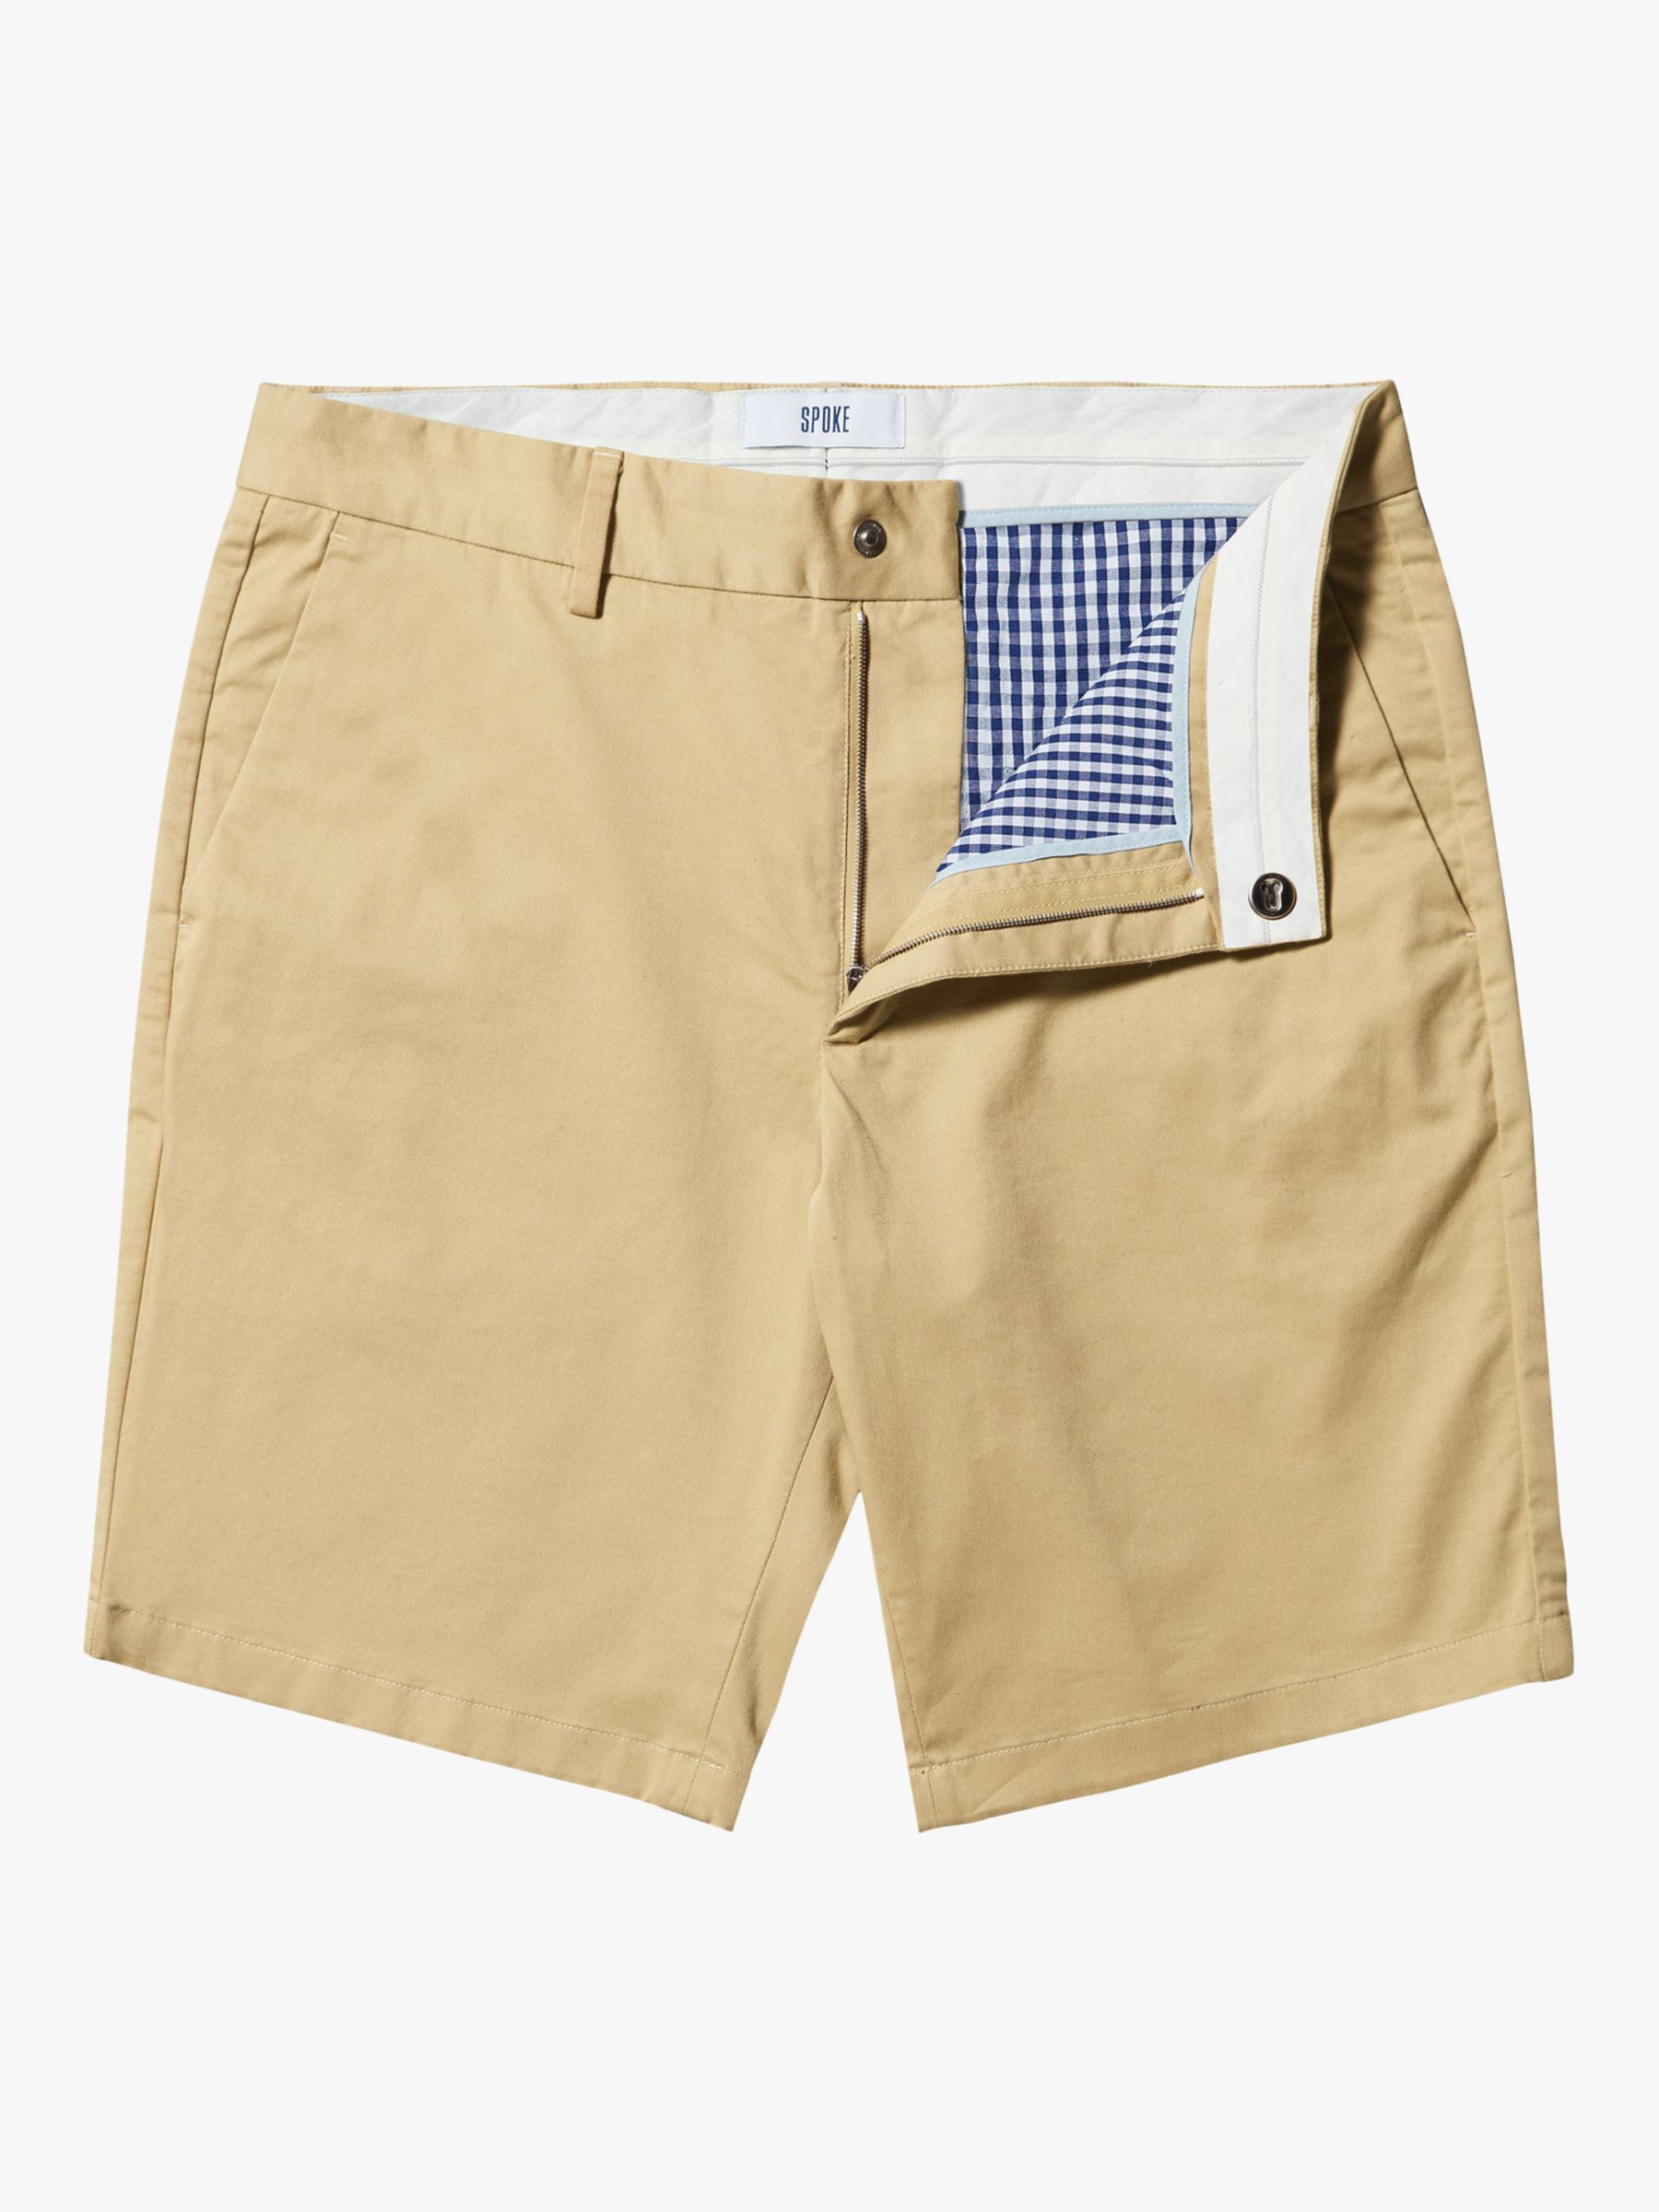 SPOKE Sharps Cotton Blend Broad Thigh Shorts, Khaki, 28L